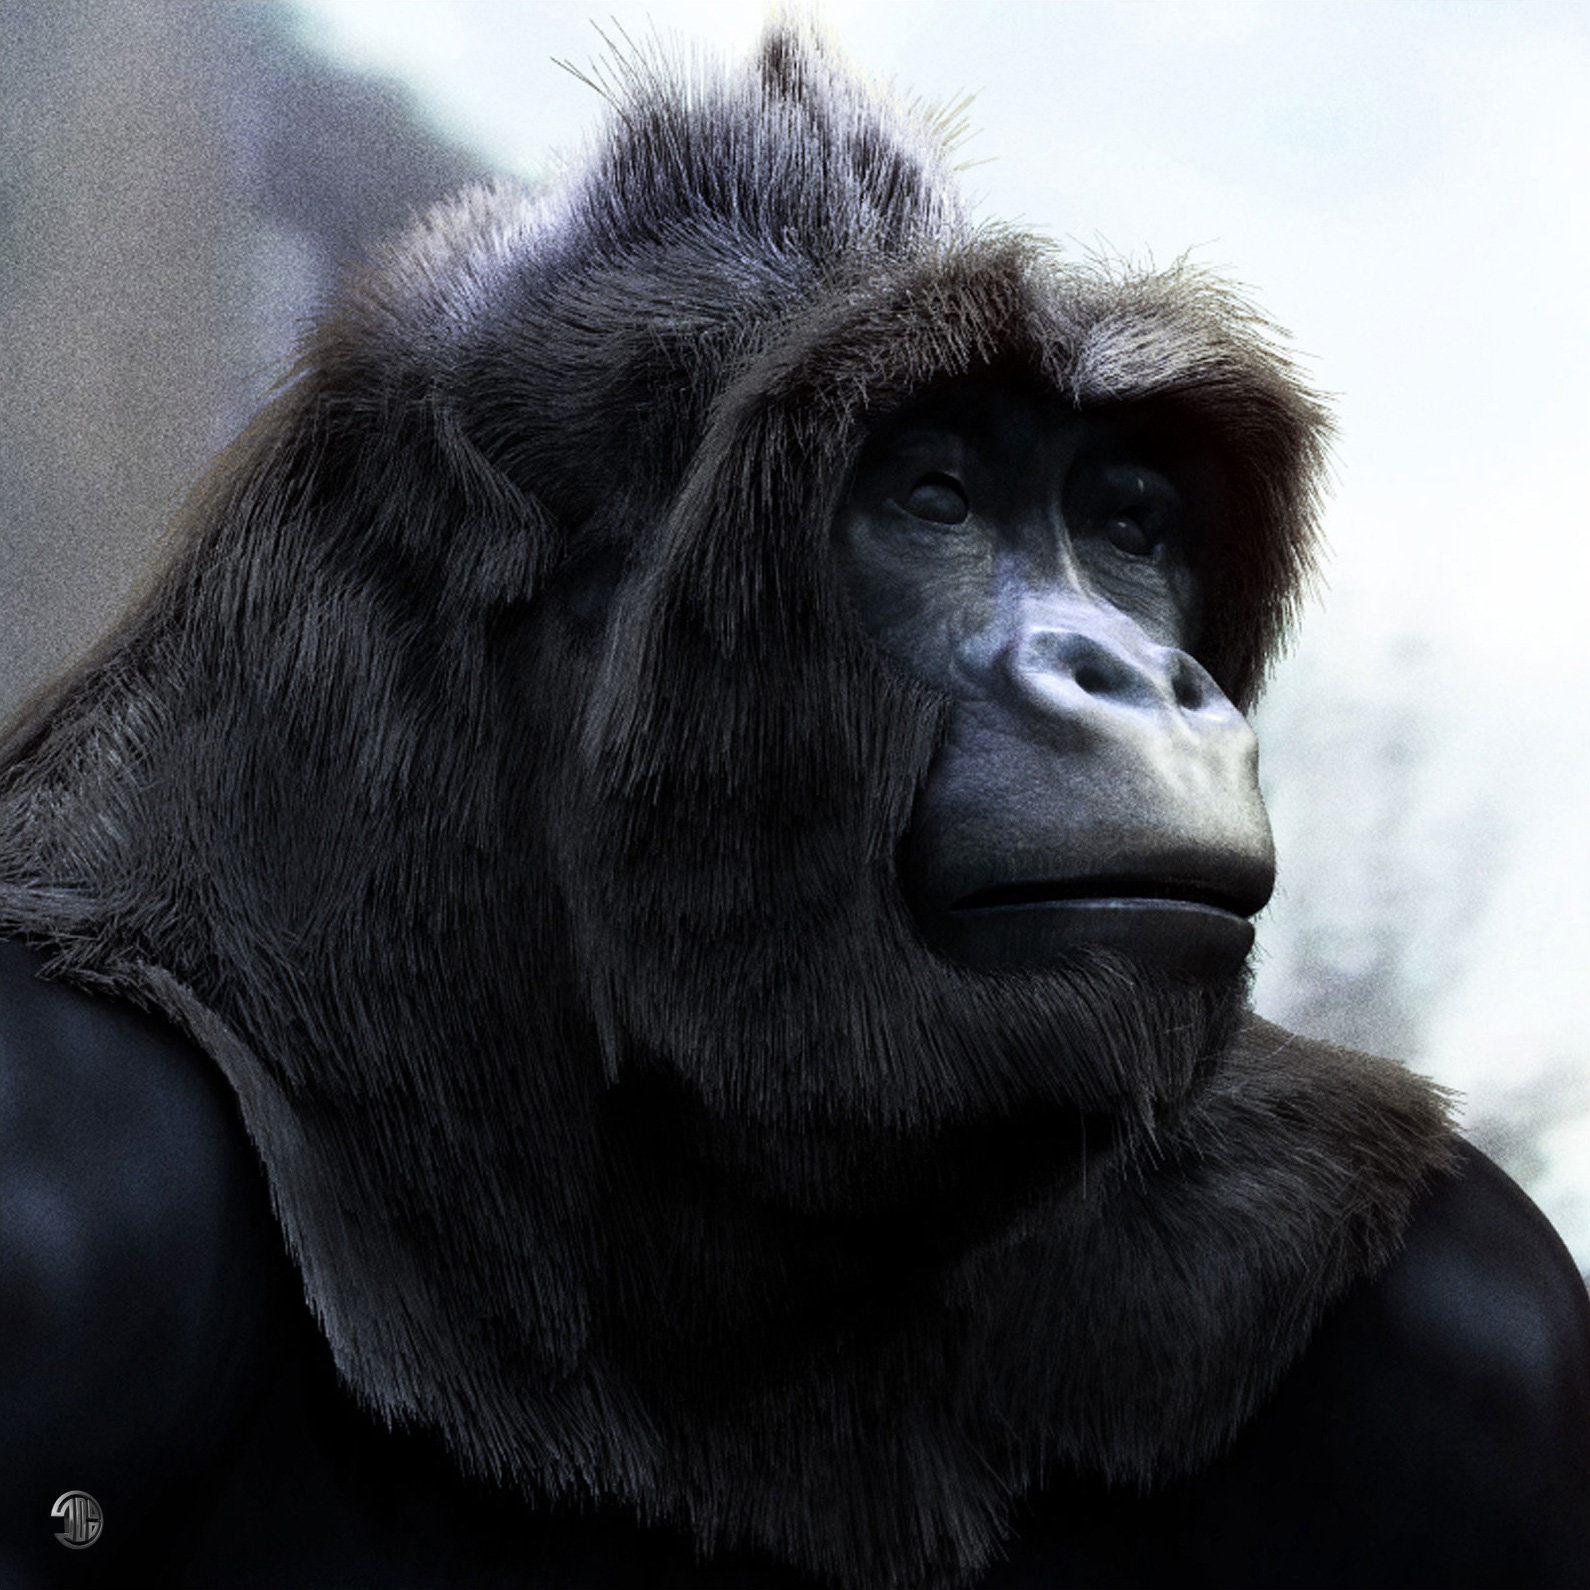 thierry-berengier-gorilla05